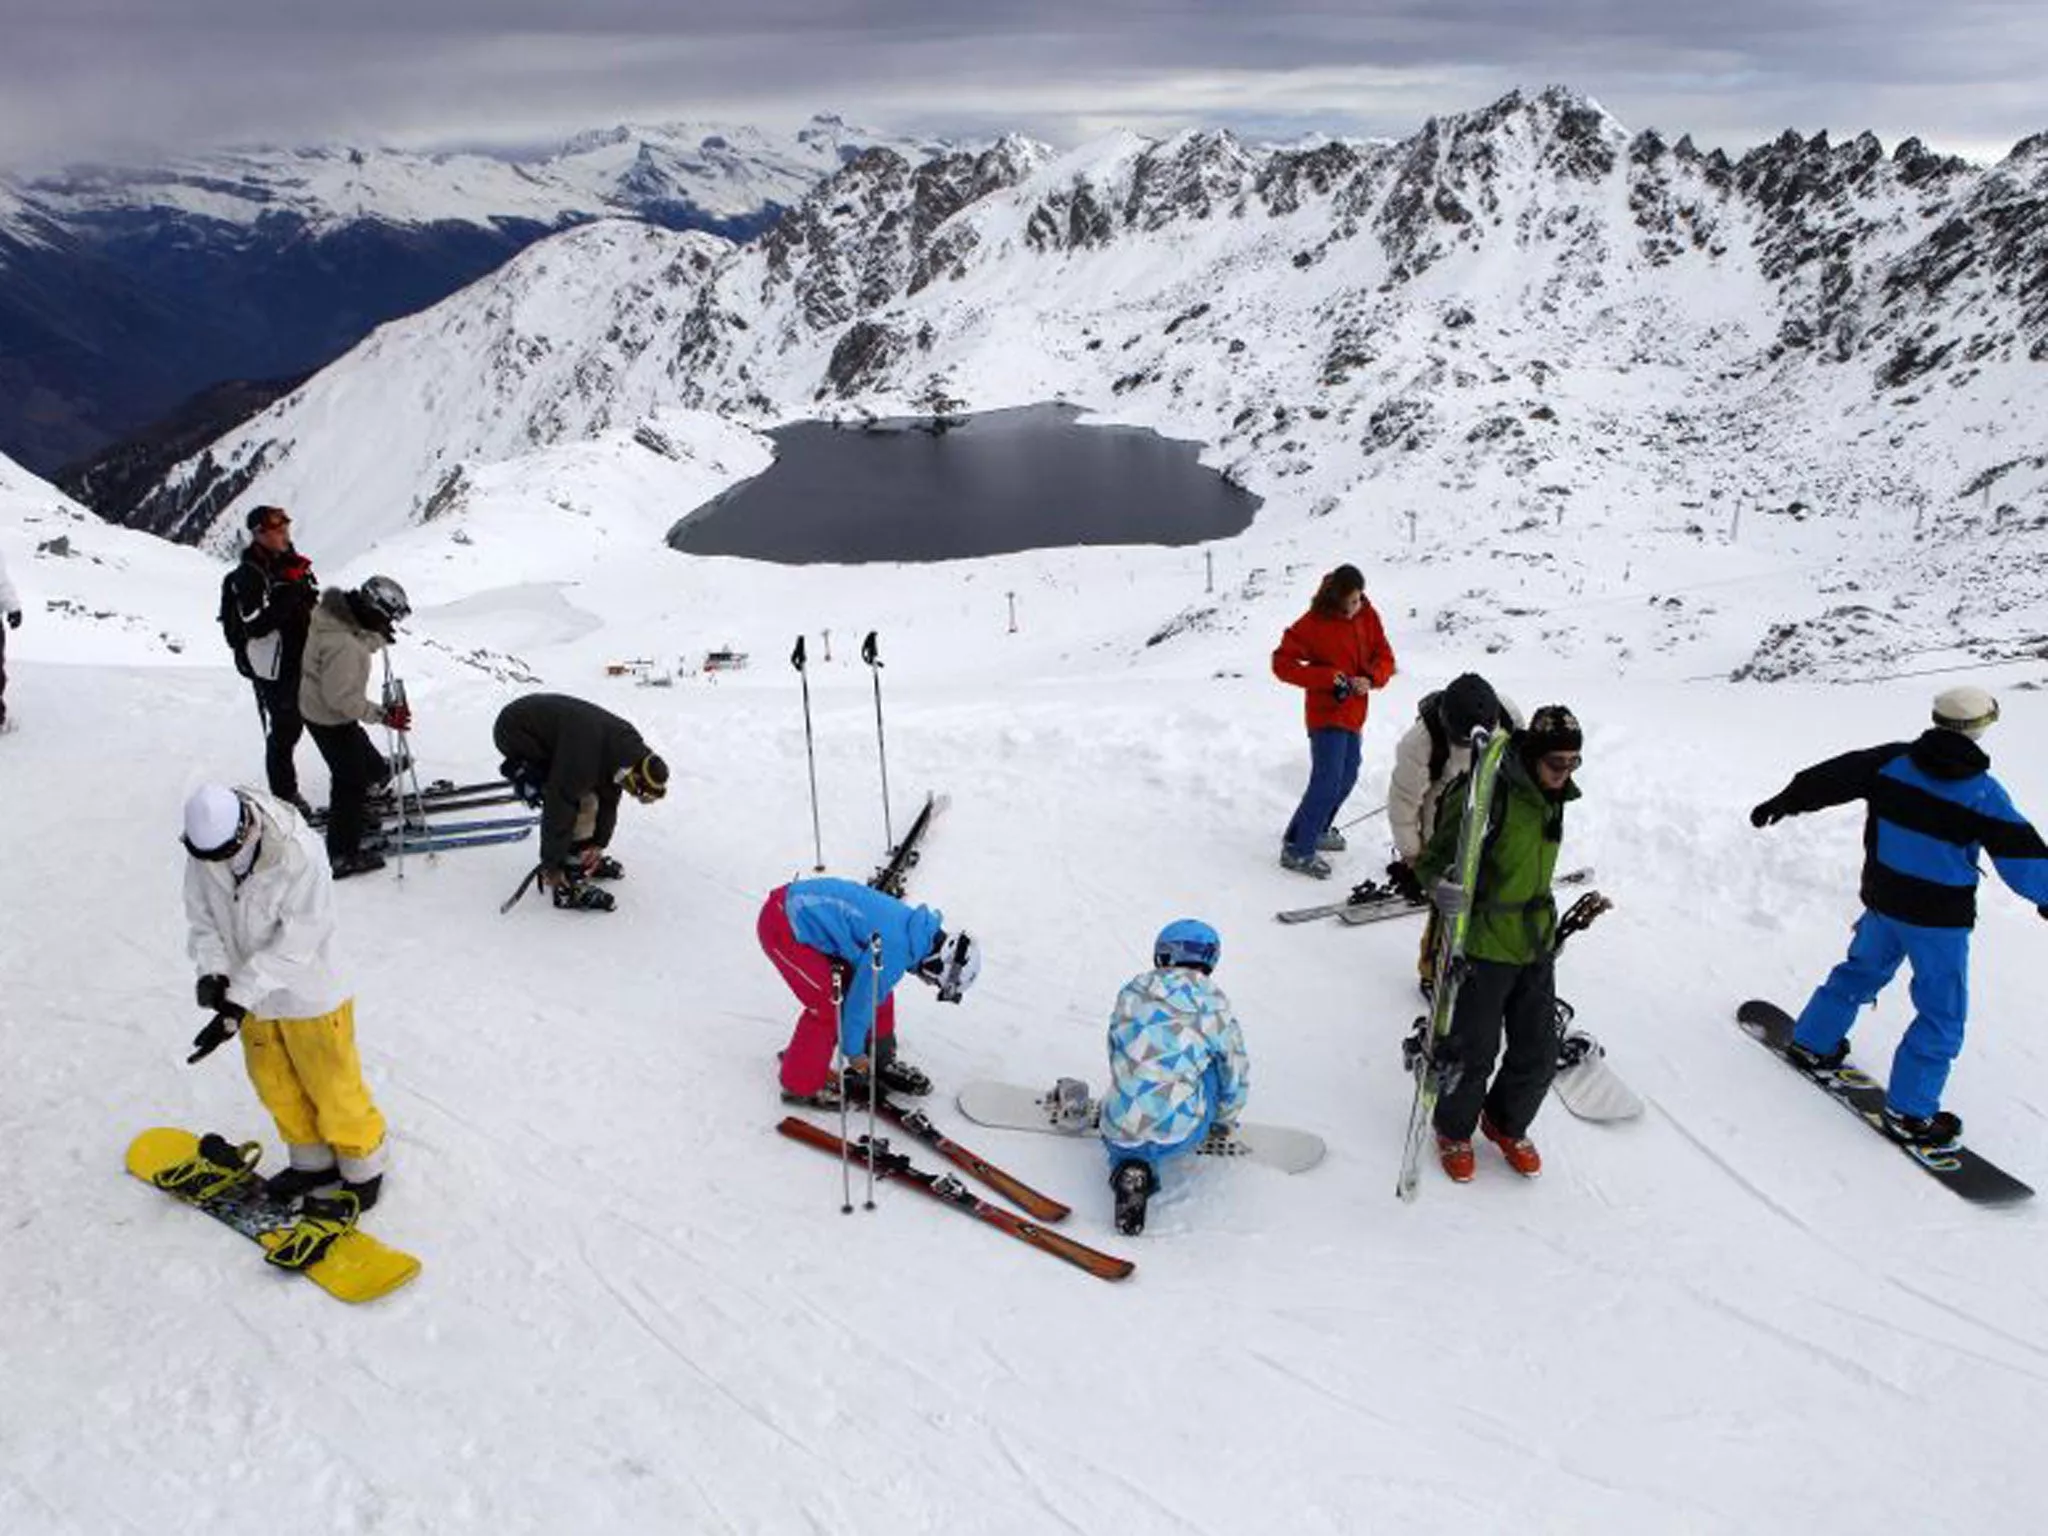 Independent Snowboard School Verbier in Switzerland, Europe | Snowboarding,Skiing - Rated 4.1